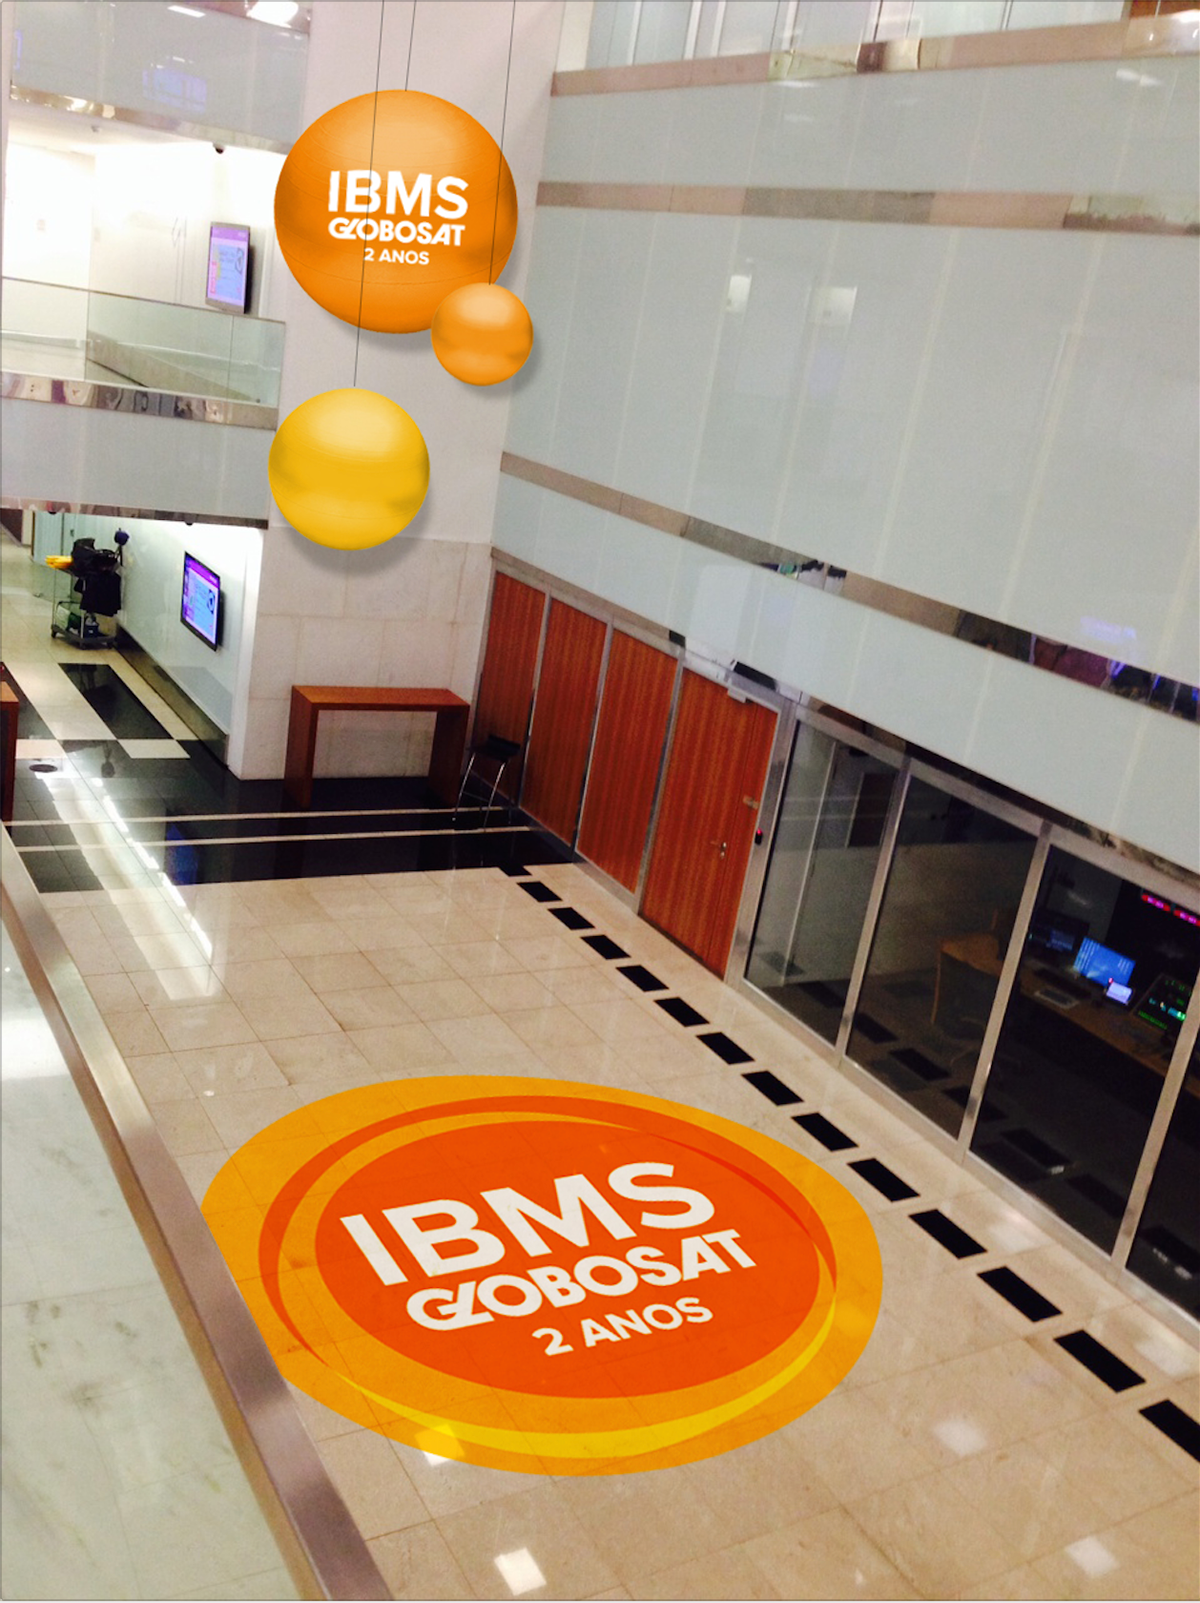 Globosat campaign campanha IBMS celebration